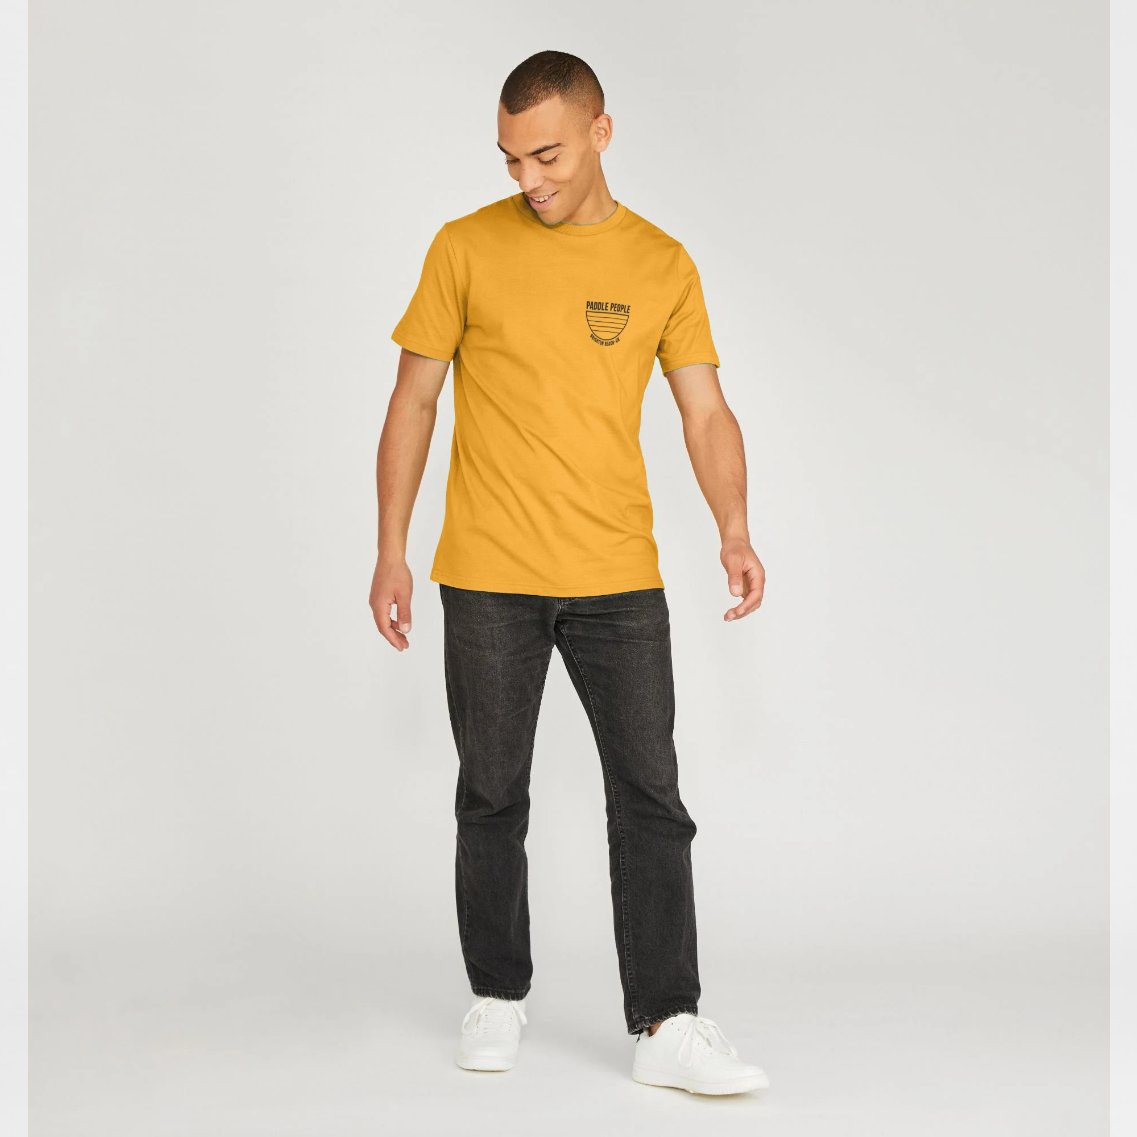 Paddle People Unisex Organic Cotton T-Shirt in Mustard - Paddle People